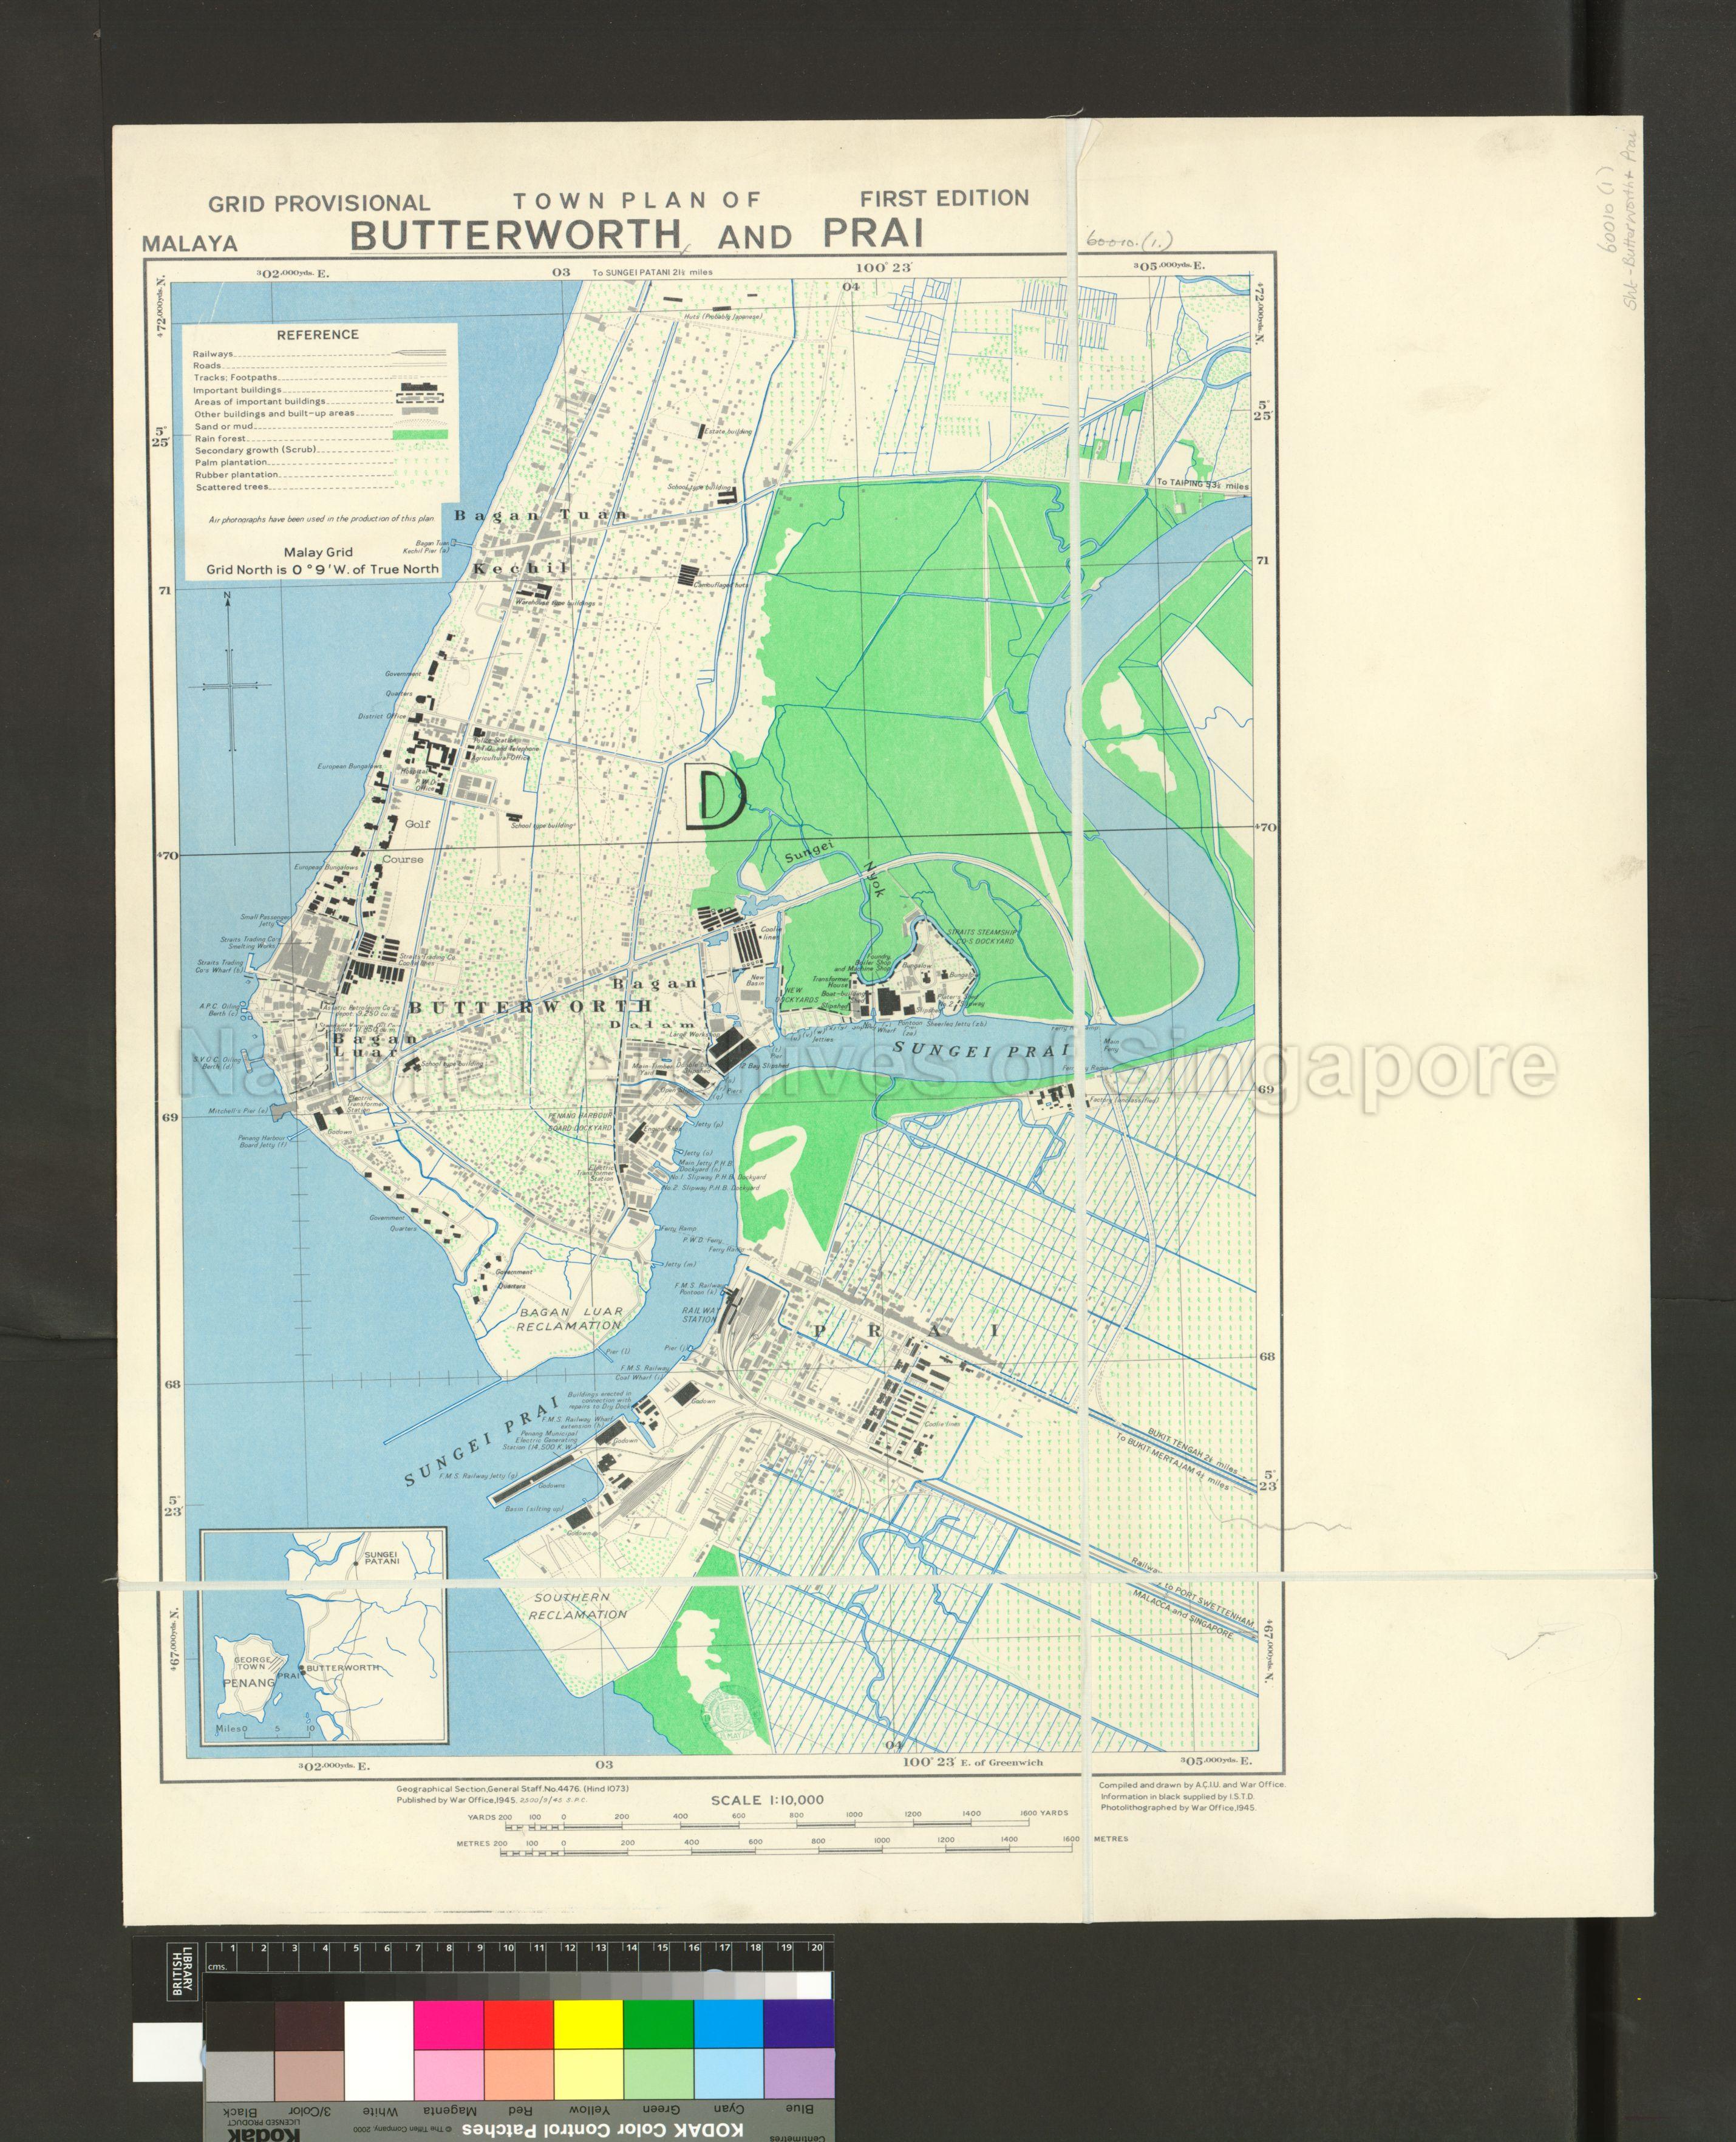 Malaya - Town Plan of Butterworth and Prai